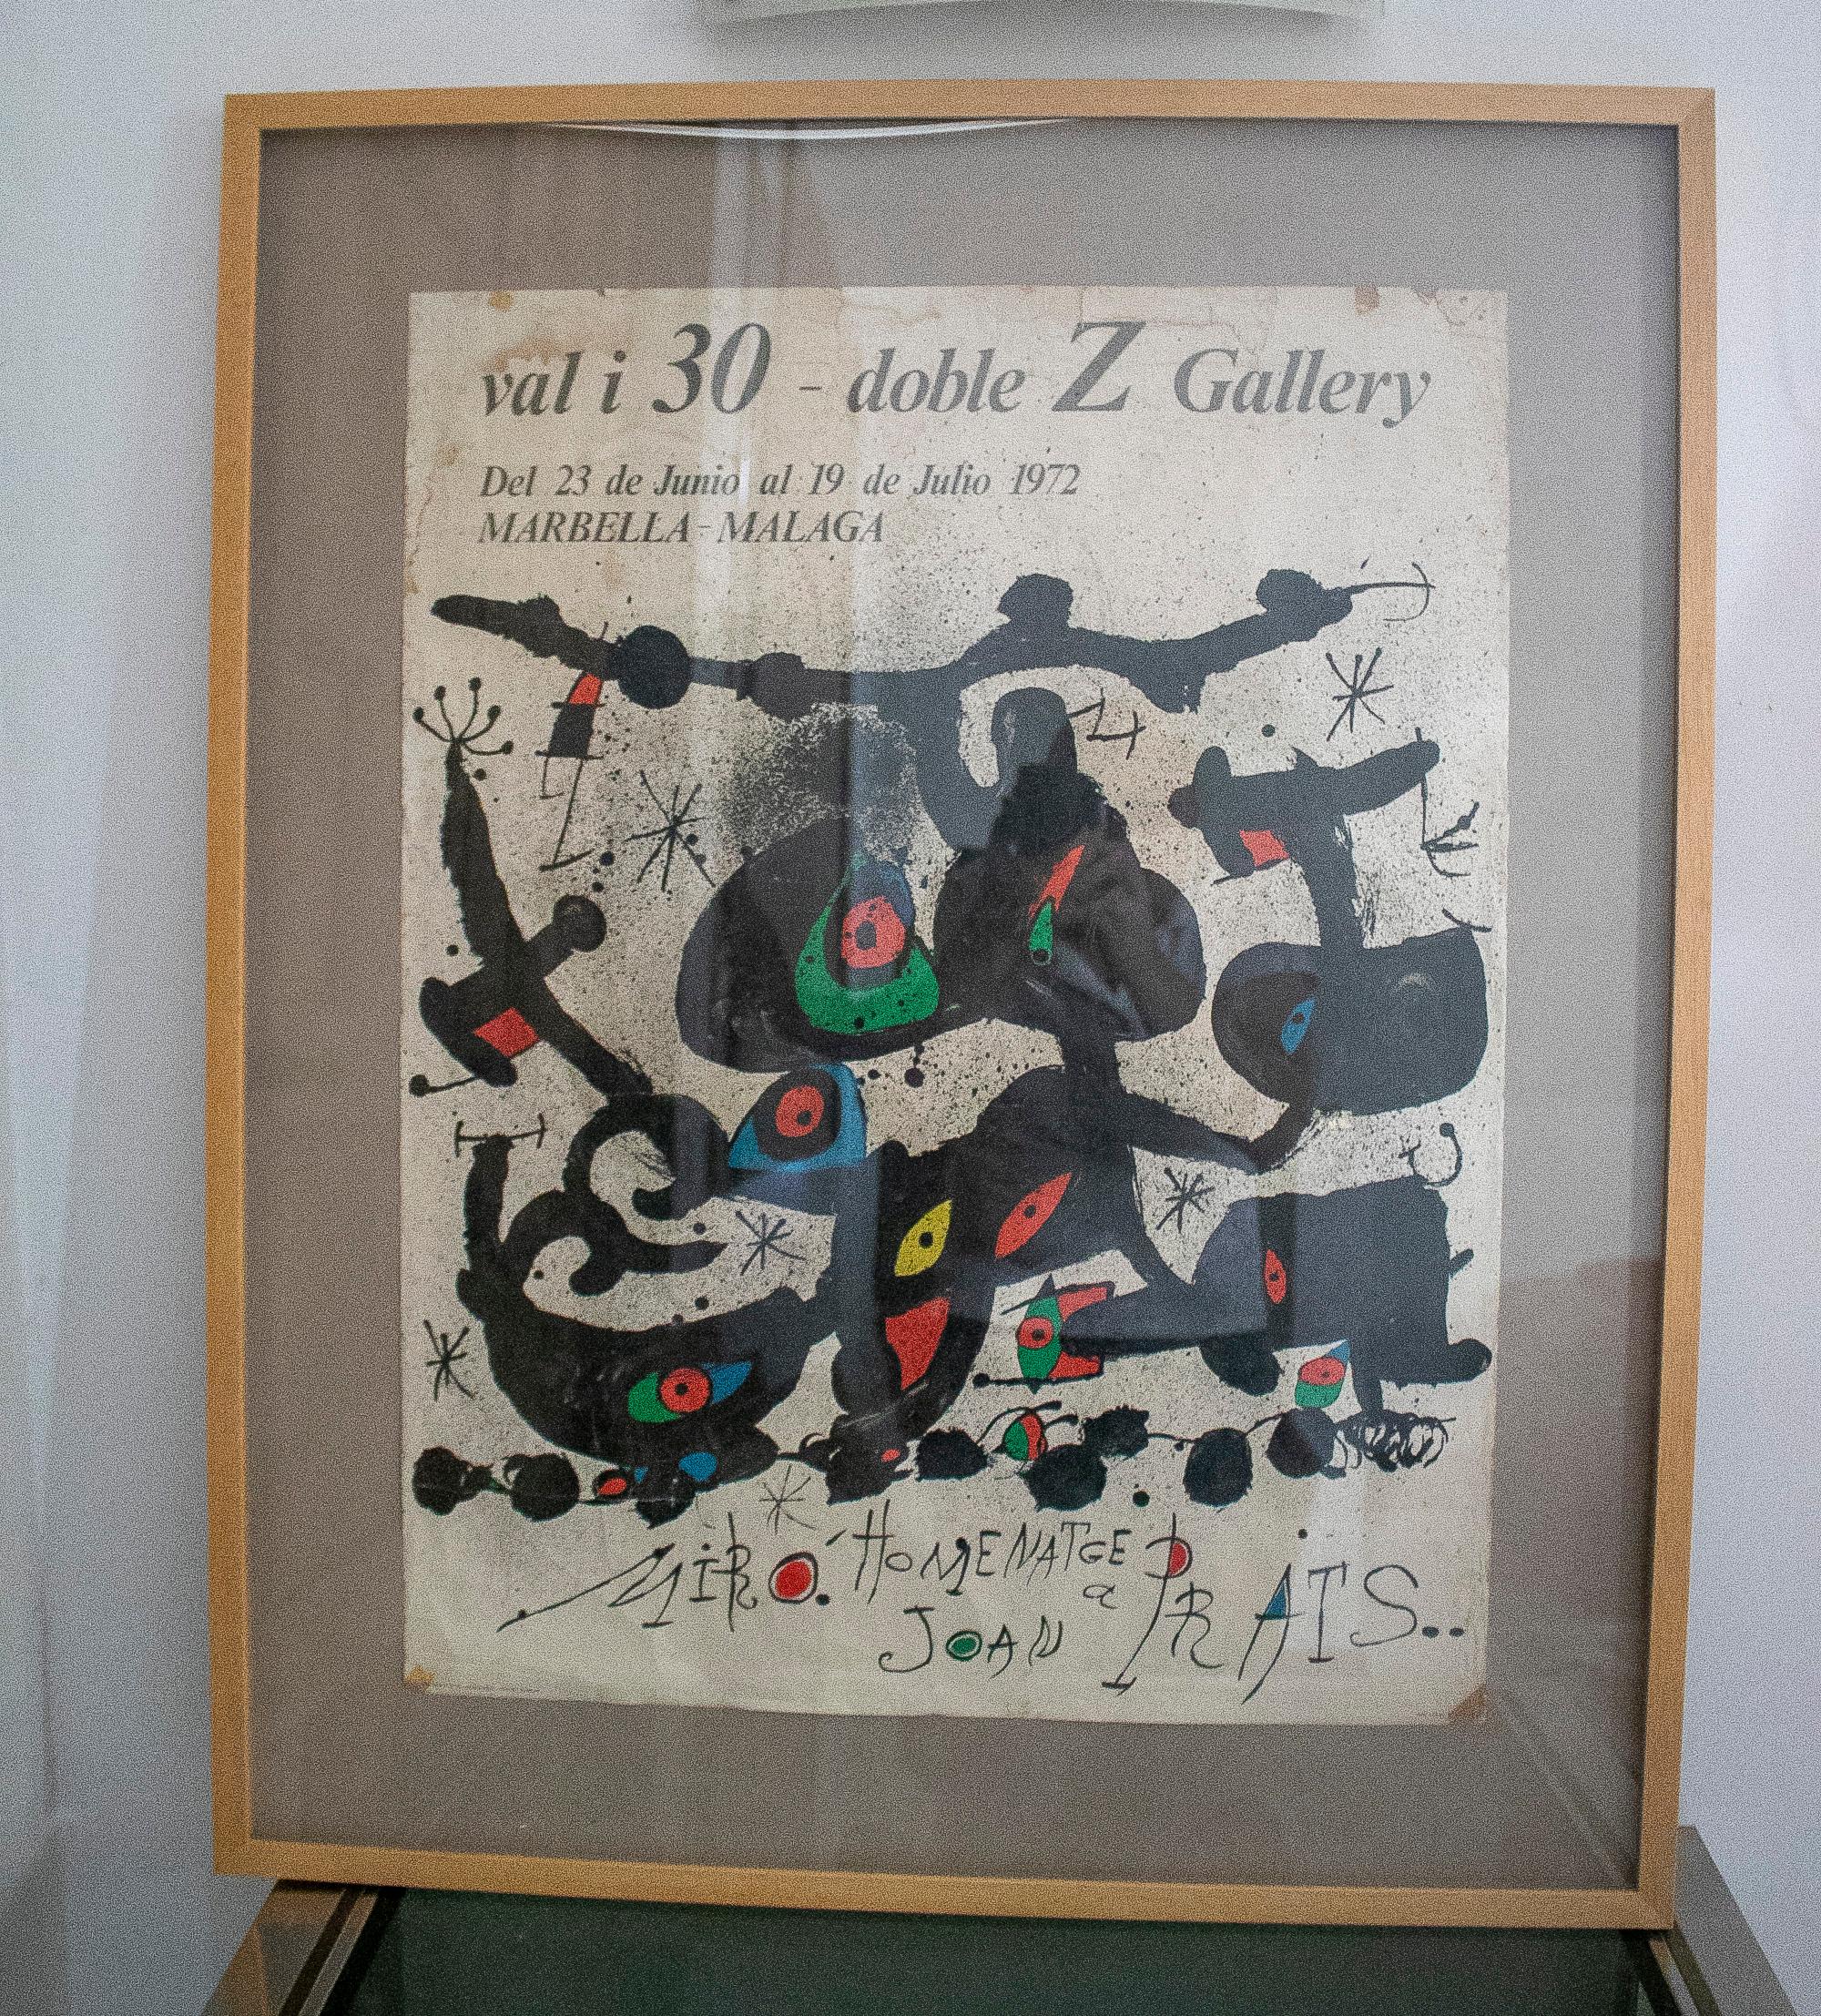 Joan Miró, 1972 Joan Prats homage in Marbella framed exhibition poster

Frame measurements: 84 x 69 x 3cm.